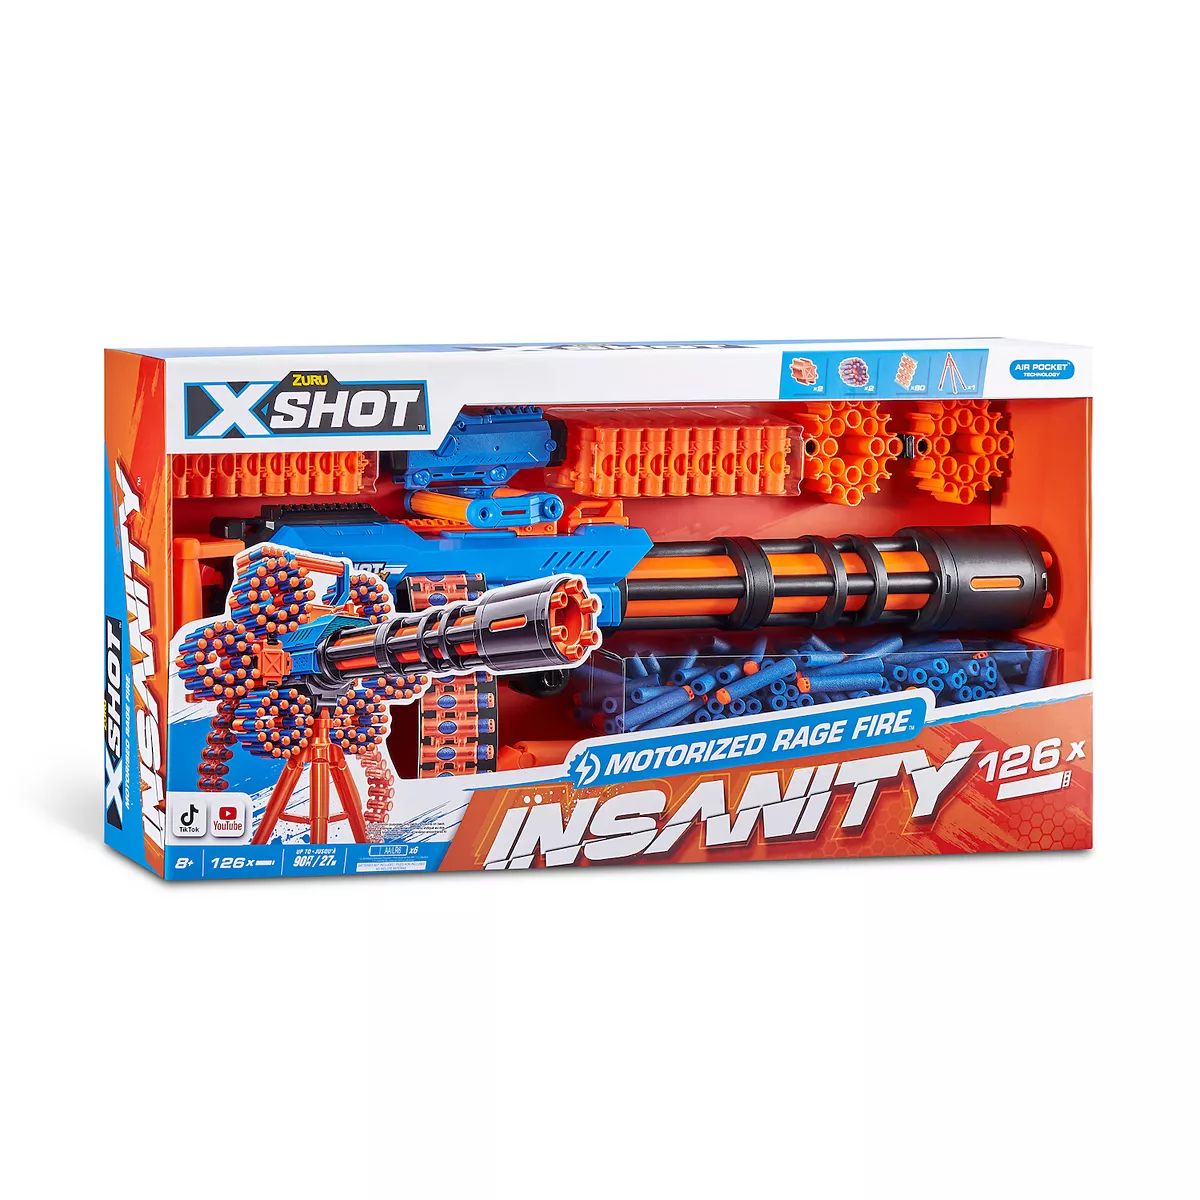 X-SHOT Insanity Series Motorized Rage Fire Gatlin Gun | Kohl's